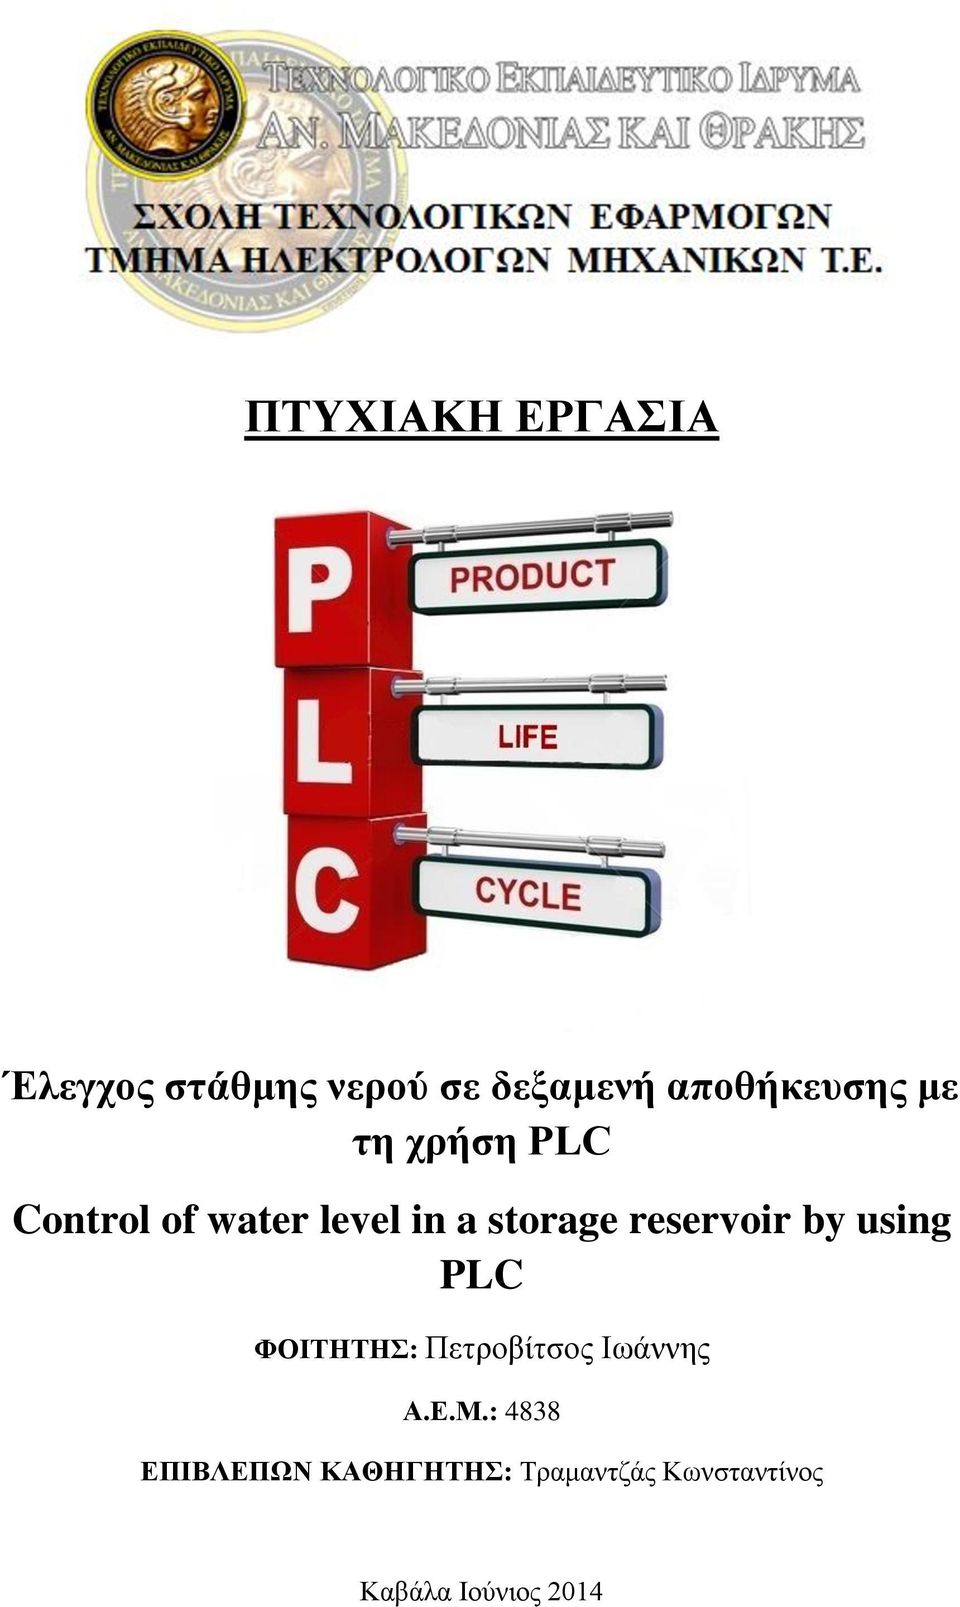 storage reservoir by using PLC ΦΟΙΤΗΤΗΣ: Πετροβίτσος Ιωάννης